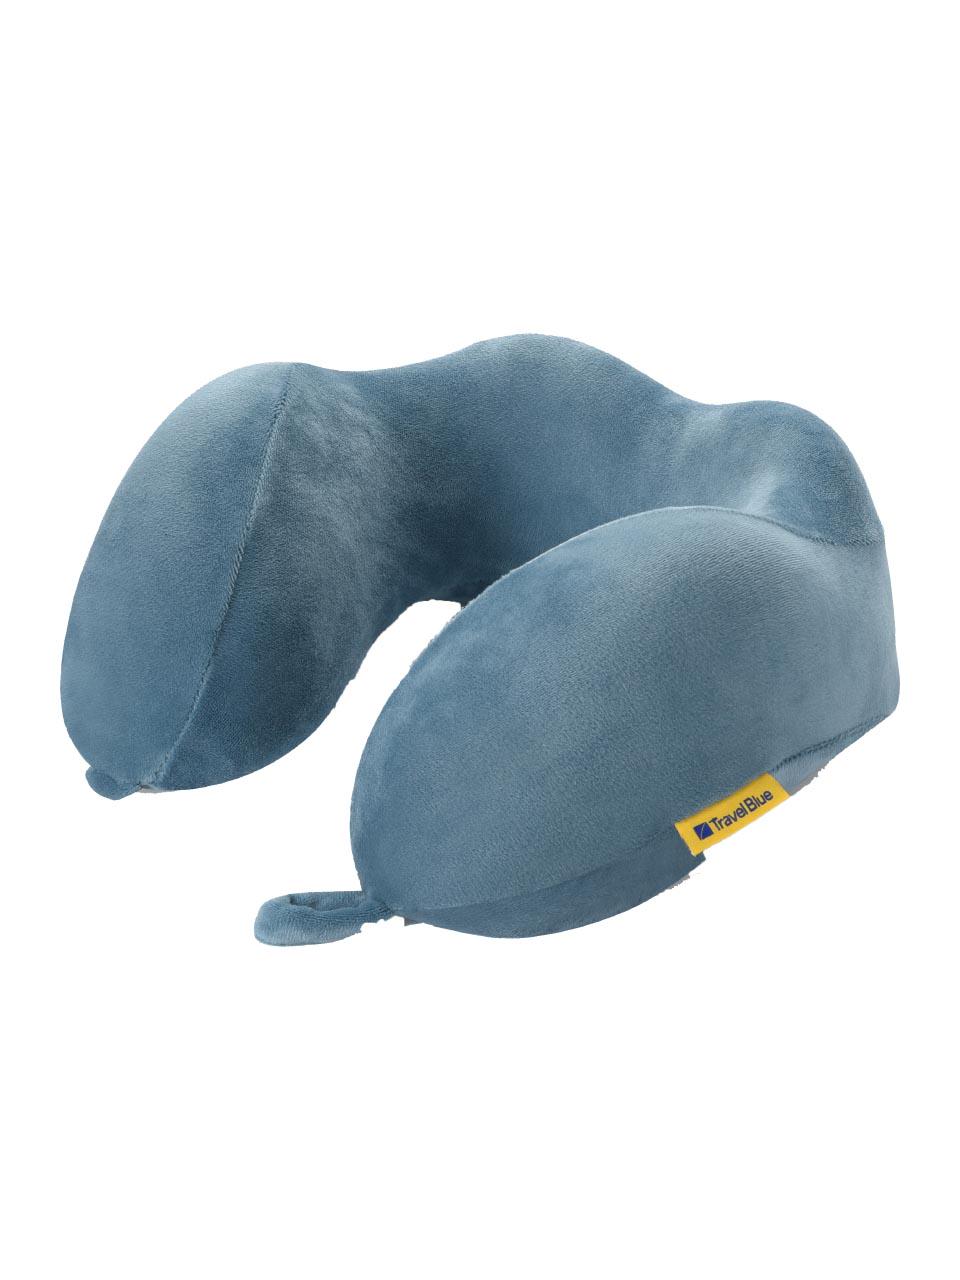 Подушка для путешествия с памятью. Travel Blue подушка для путешествий. Подушка Travel Blue Memory. Travel Blue 212. Travel Pillow синяя.